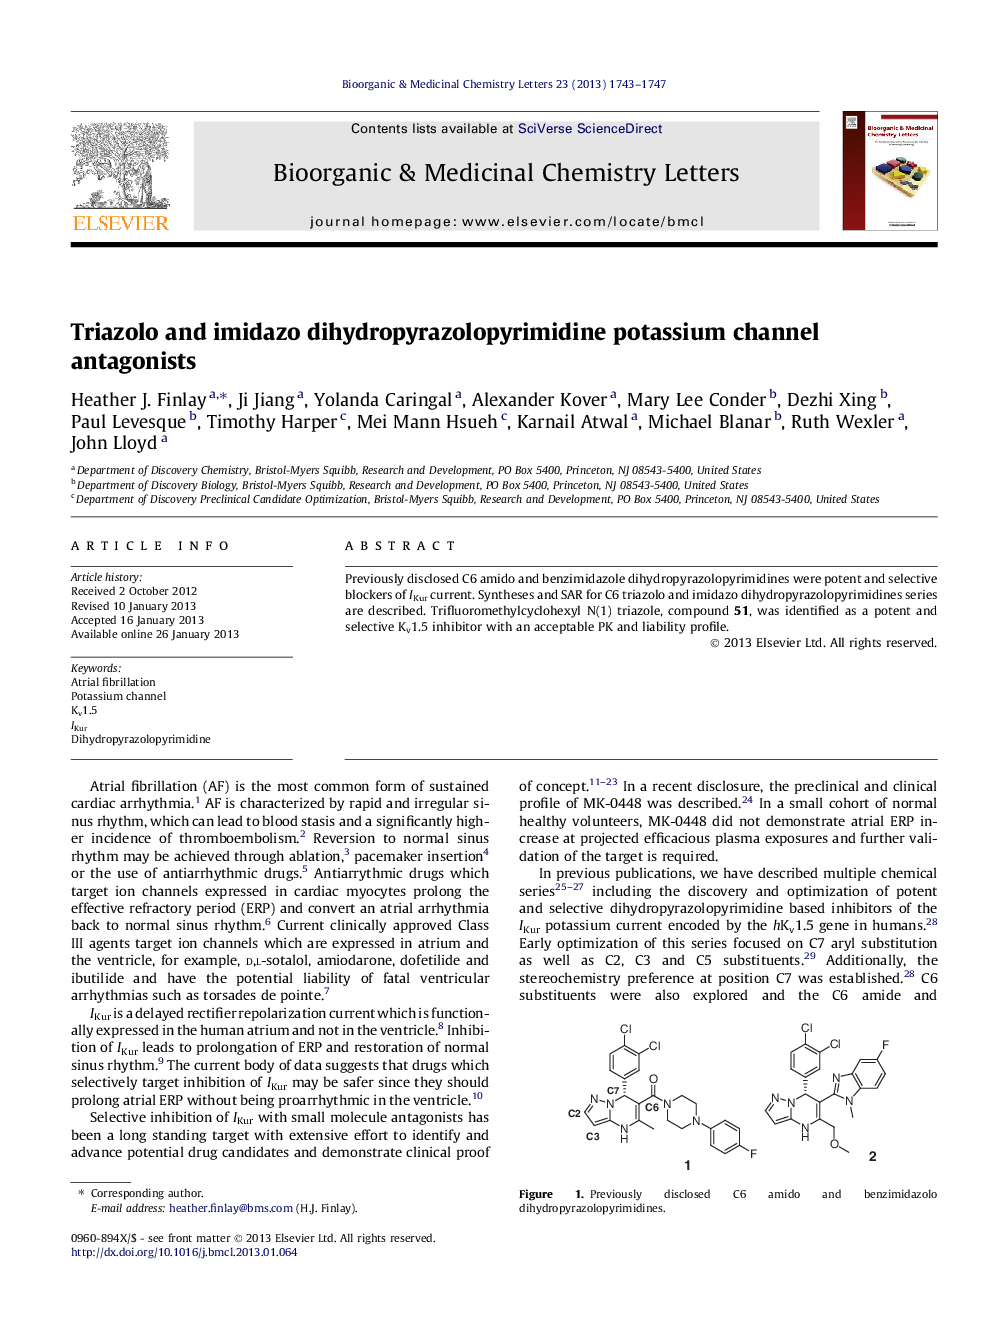 Triazolo and imidazo dihydropyrazolopyrimidine potassium channel antagonists